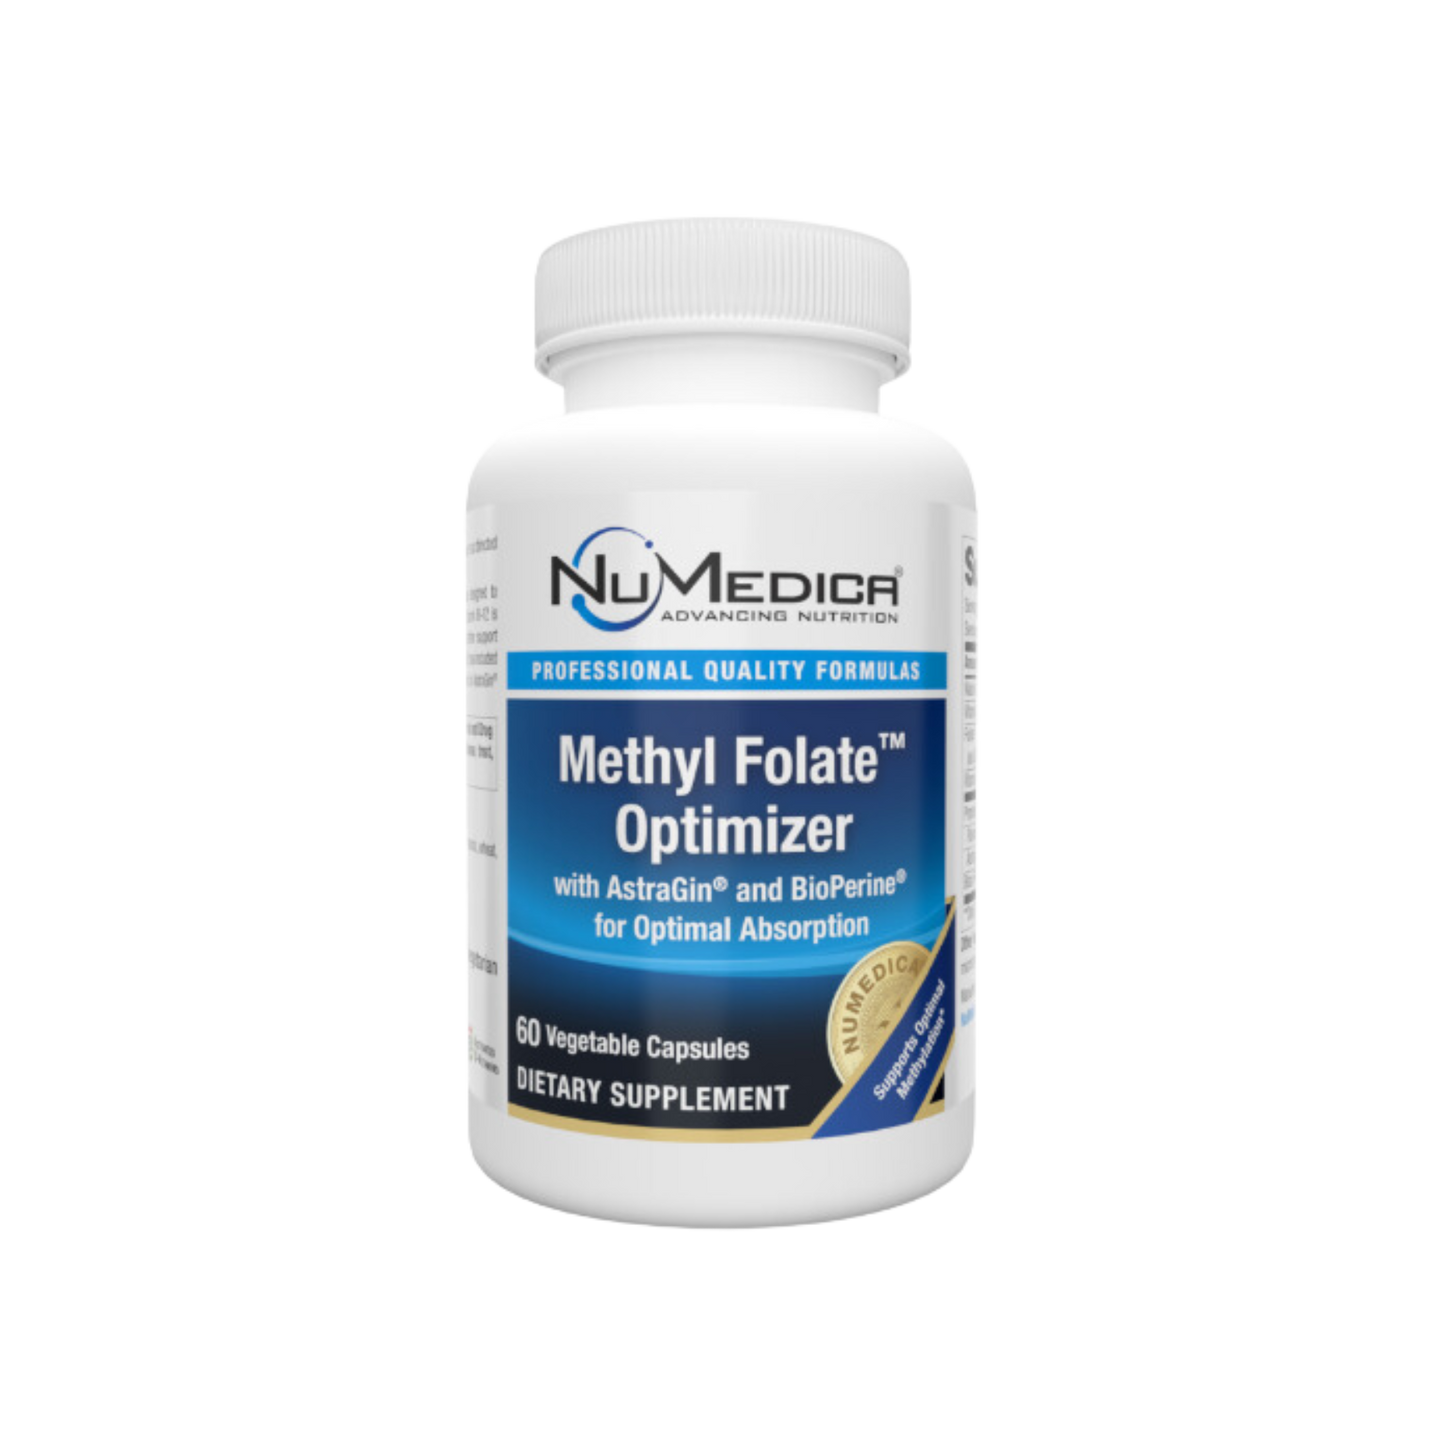 Numedica Methyl Folate Optimizer Capsules